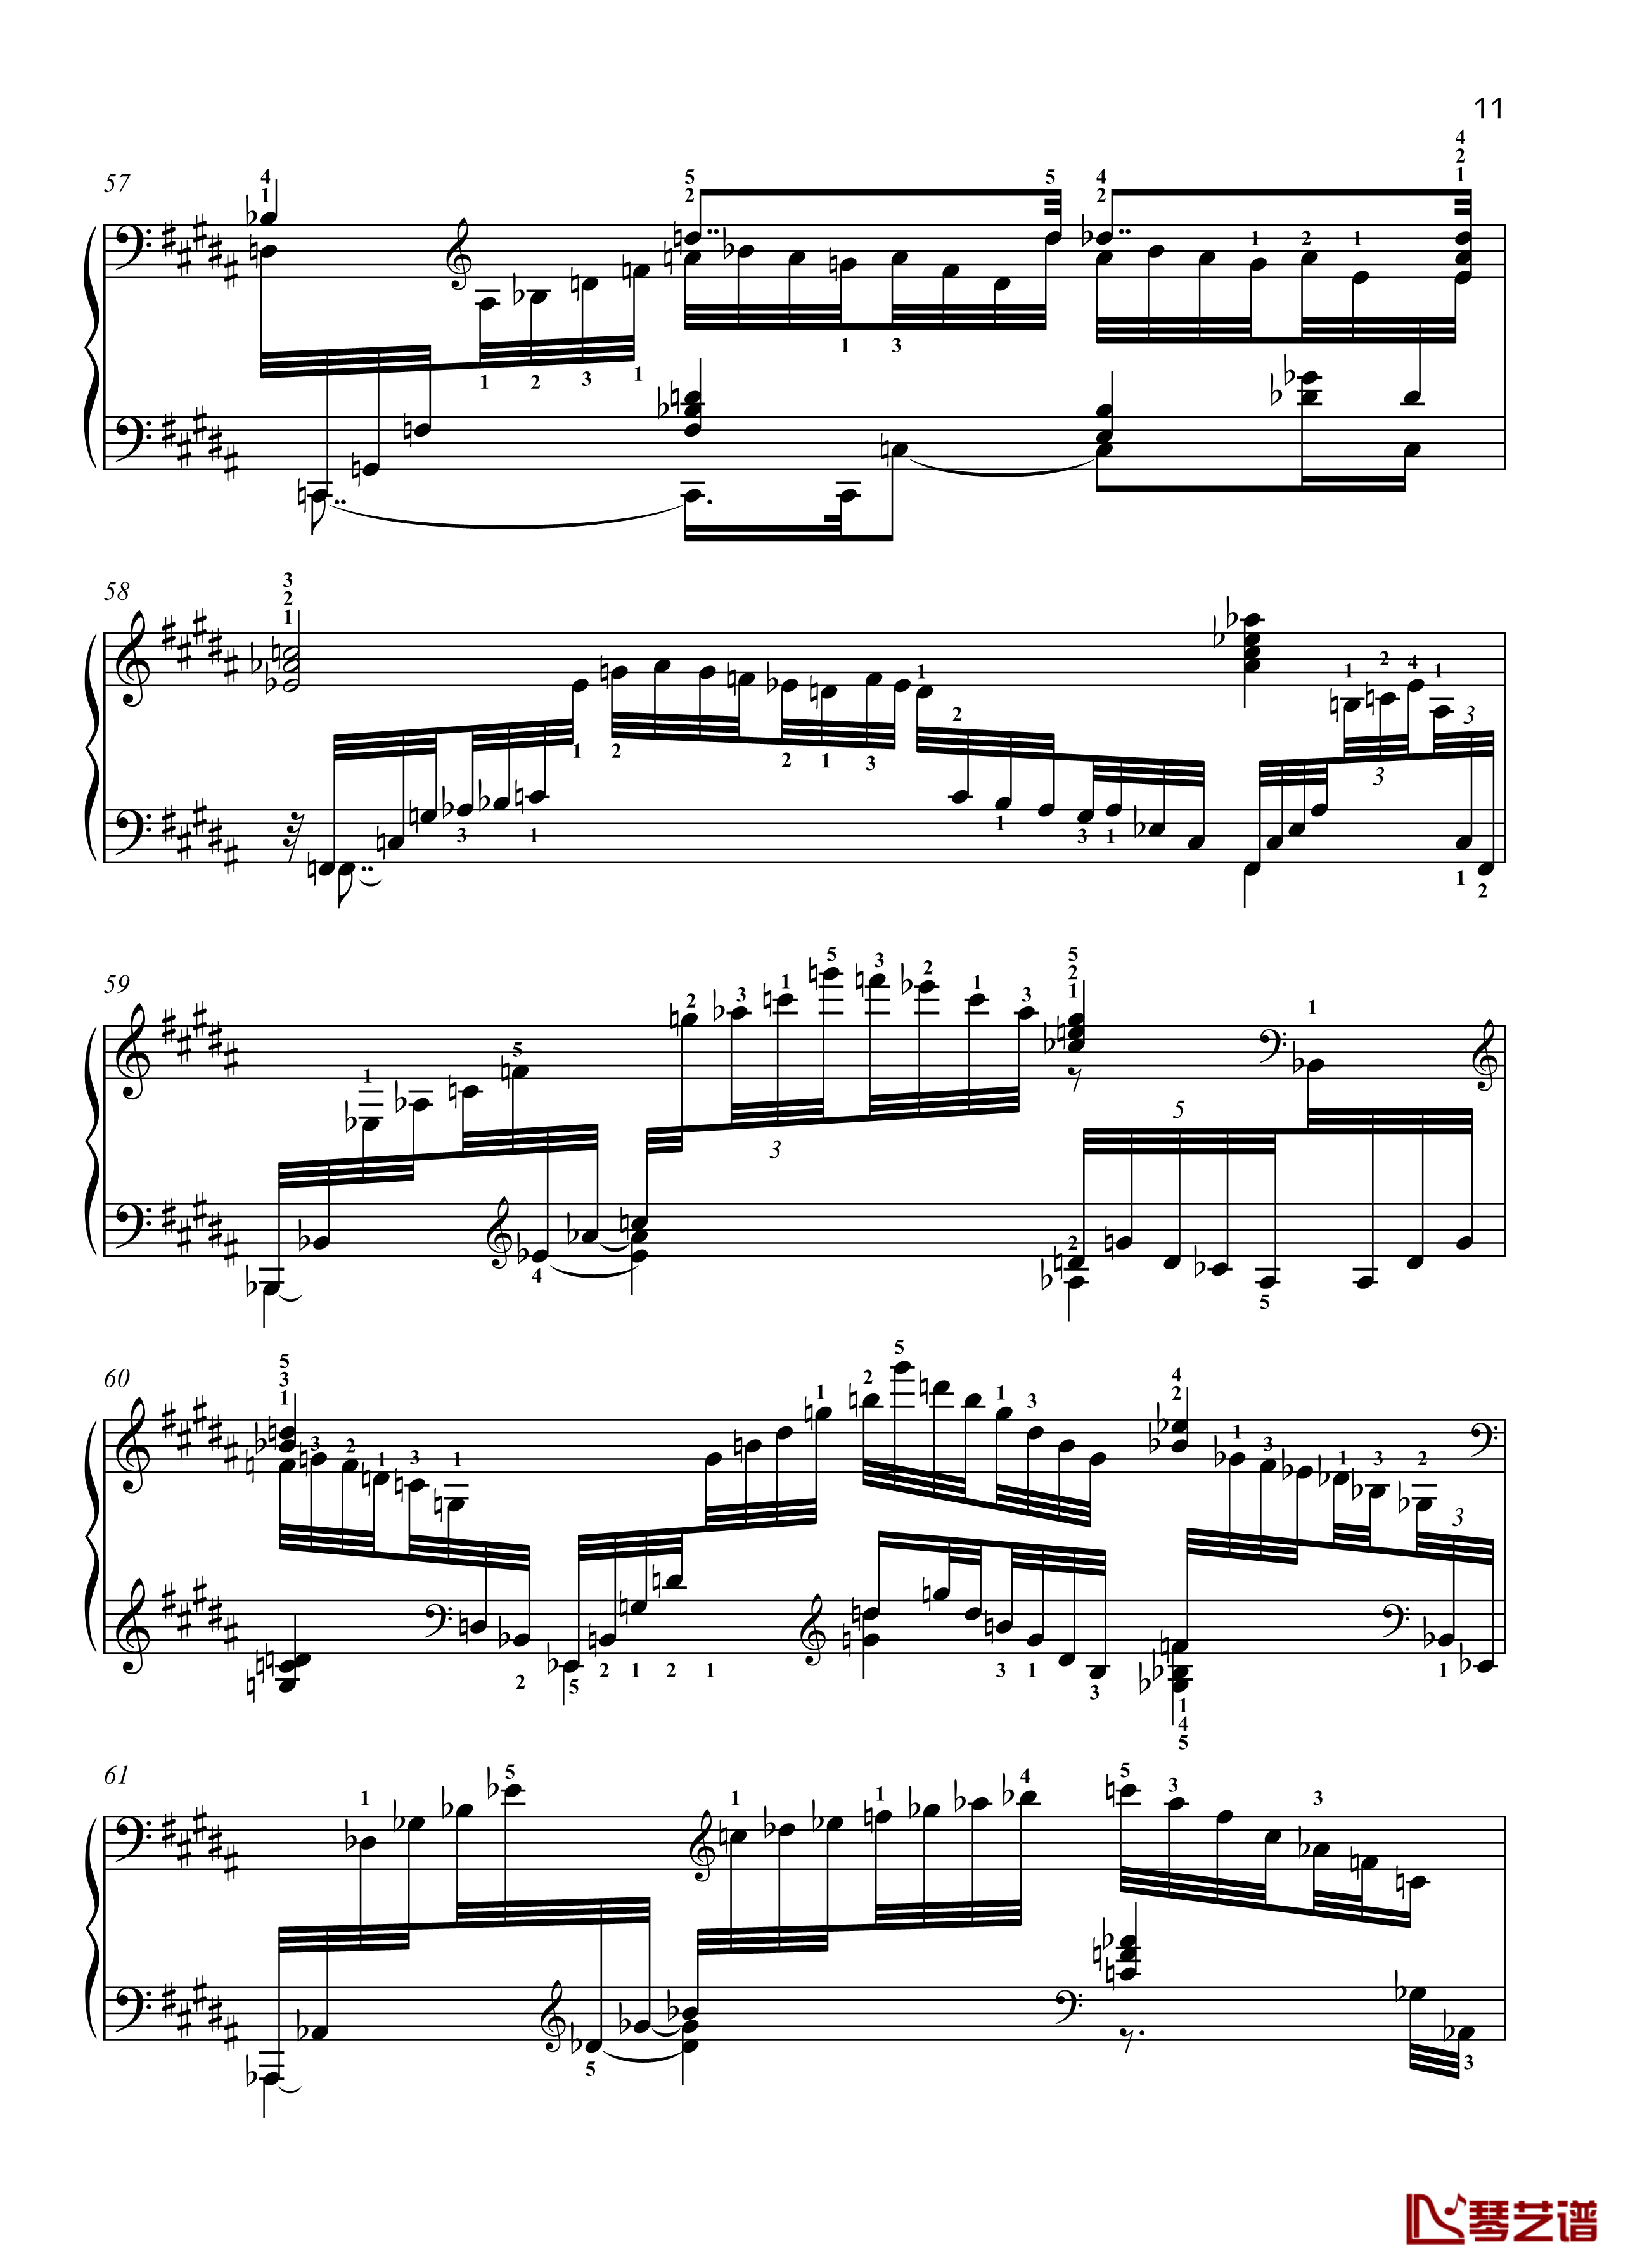 No. 4. Reminiscence钢琴谱-带指法-八首音乐会练习曲  Eight Concert ?tudes Op 40 - -爵士-尼古拉·凯帕斯汀